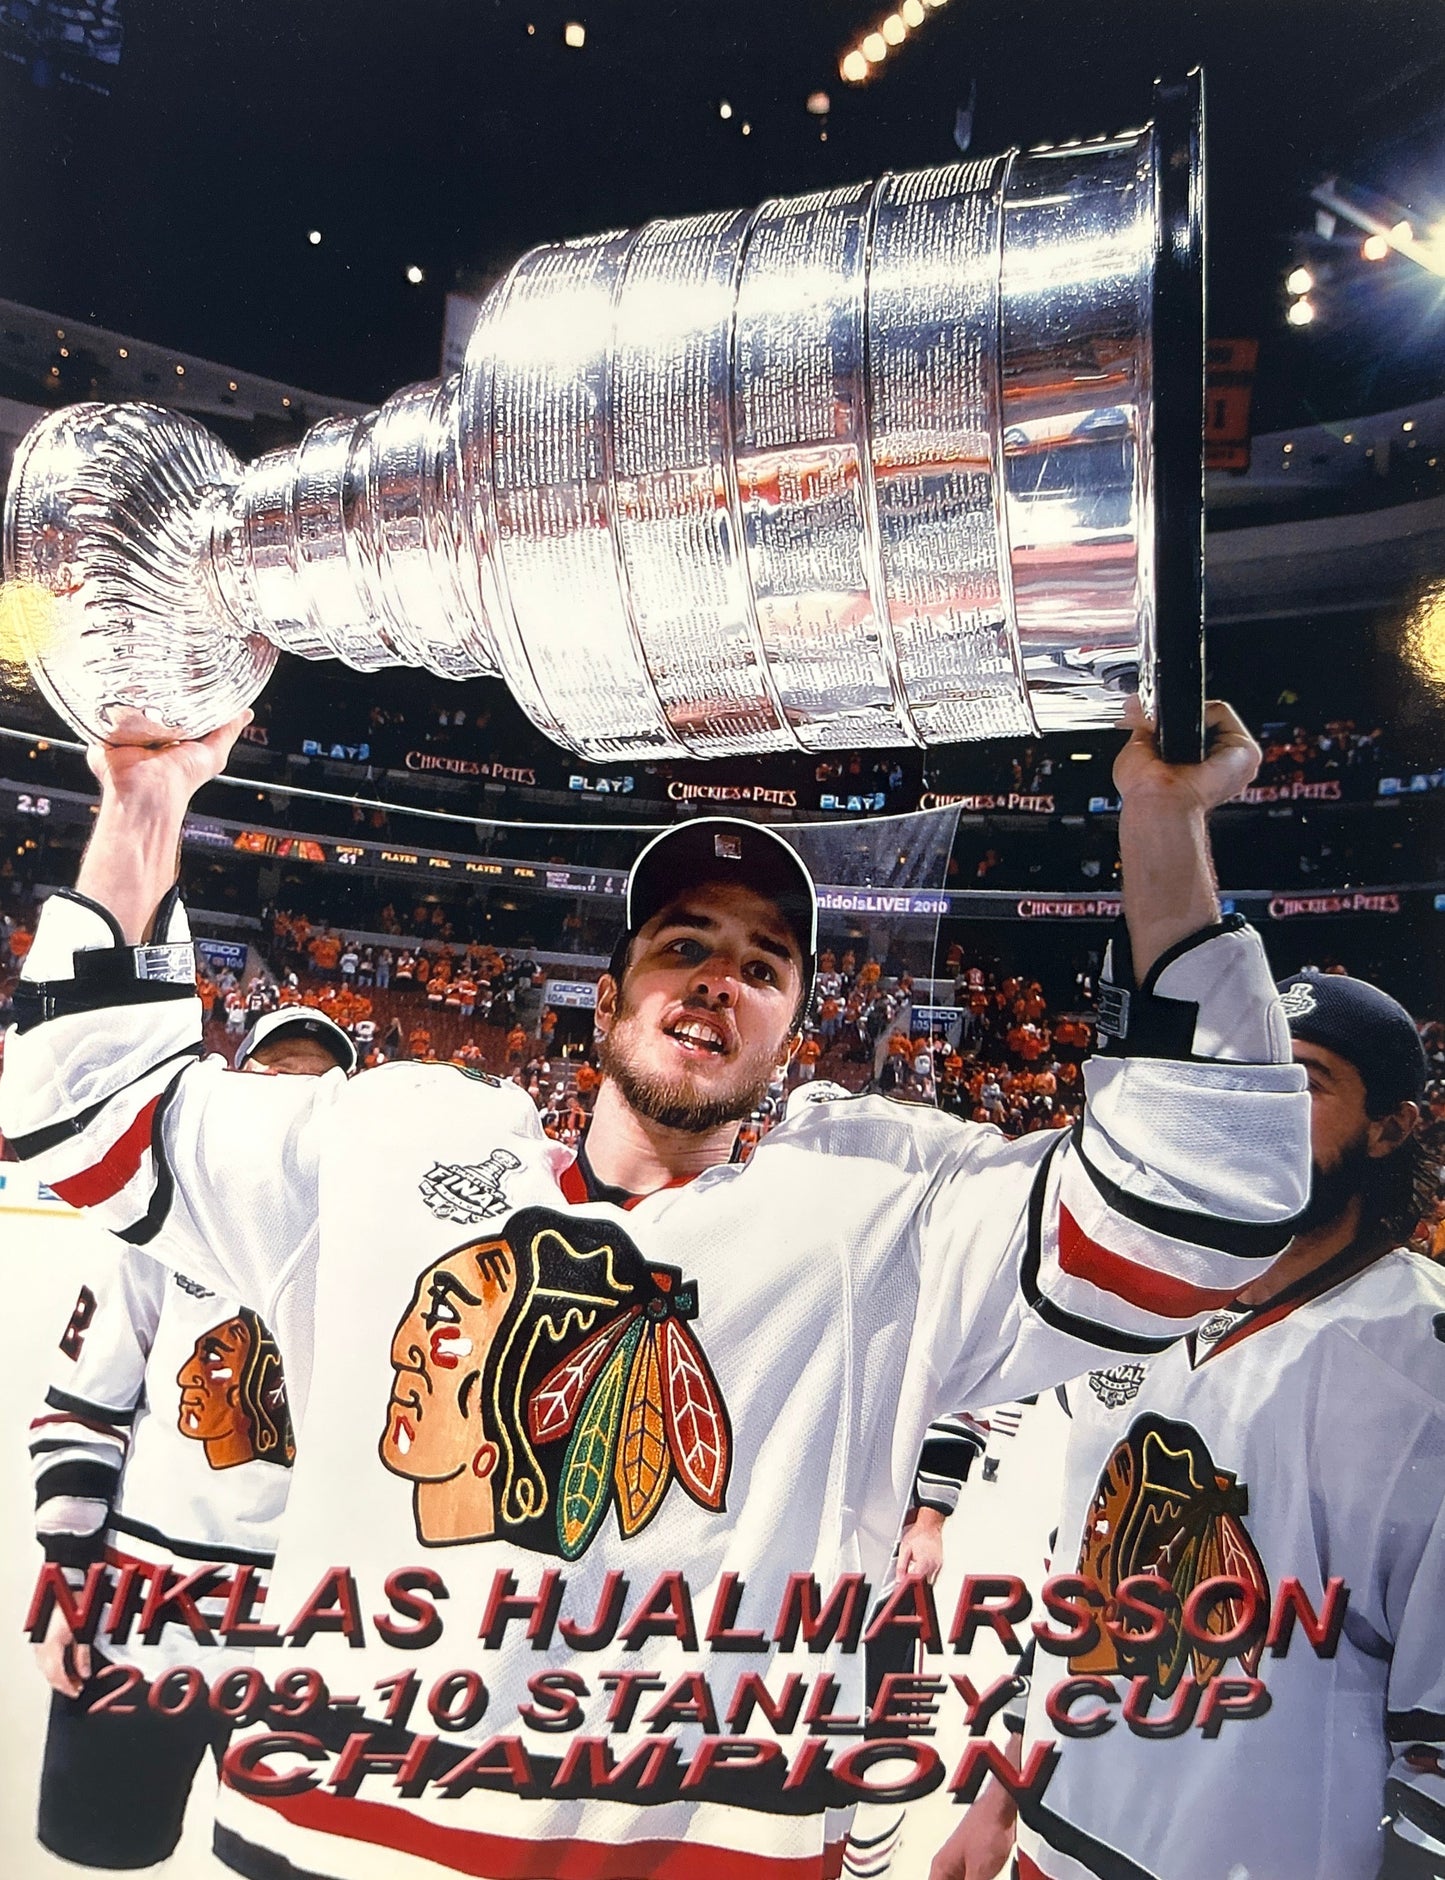 Niklas Hjalmarsson 2009-10 Stanley Cup Champion Chicago Blackhawks Action Photo (8X10)